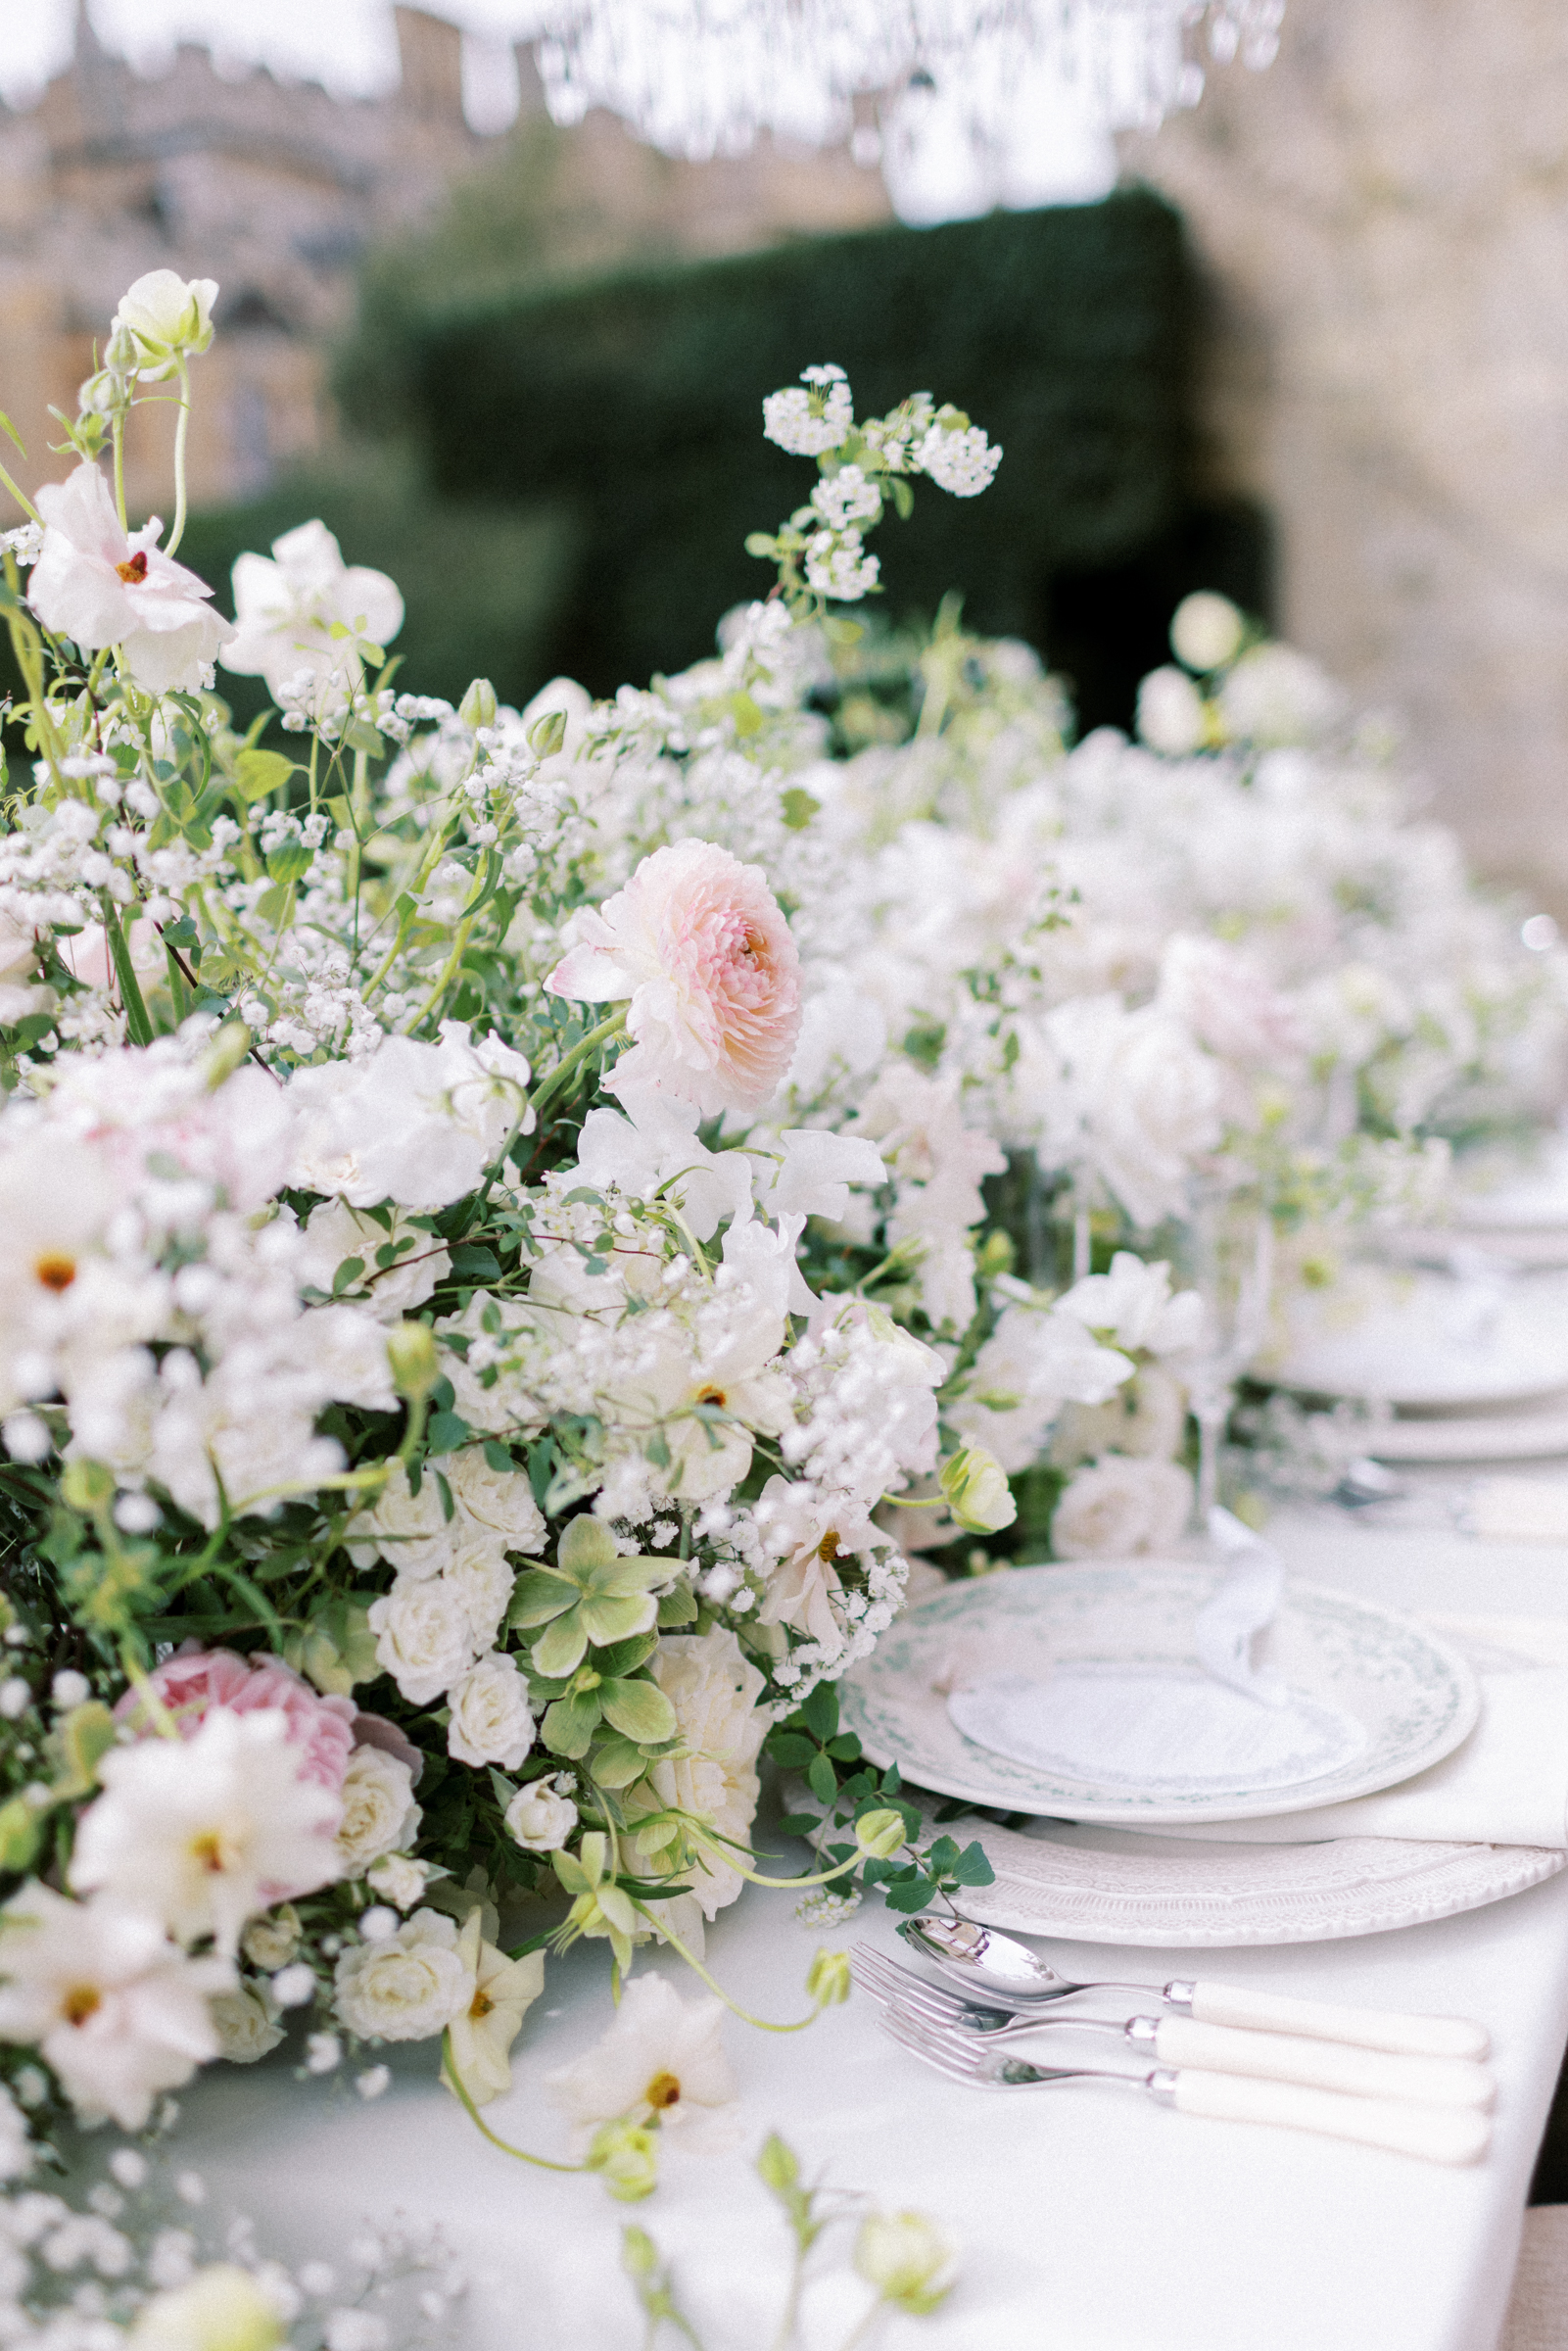 Stunning wedding flowers at Sudeley Castle Wedding venue